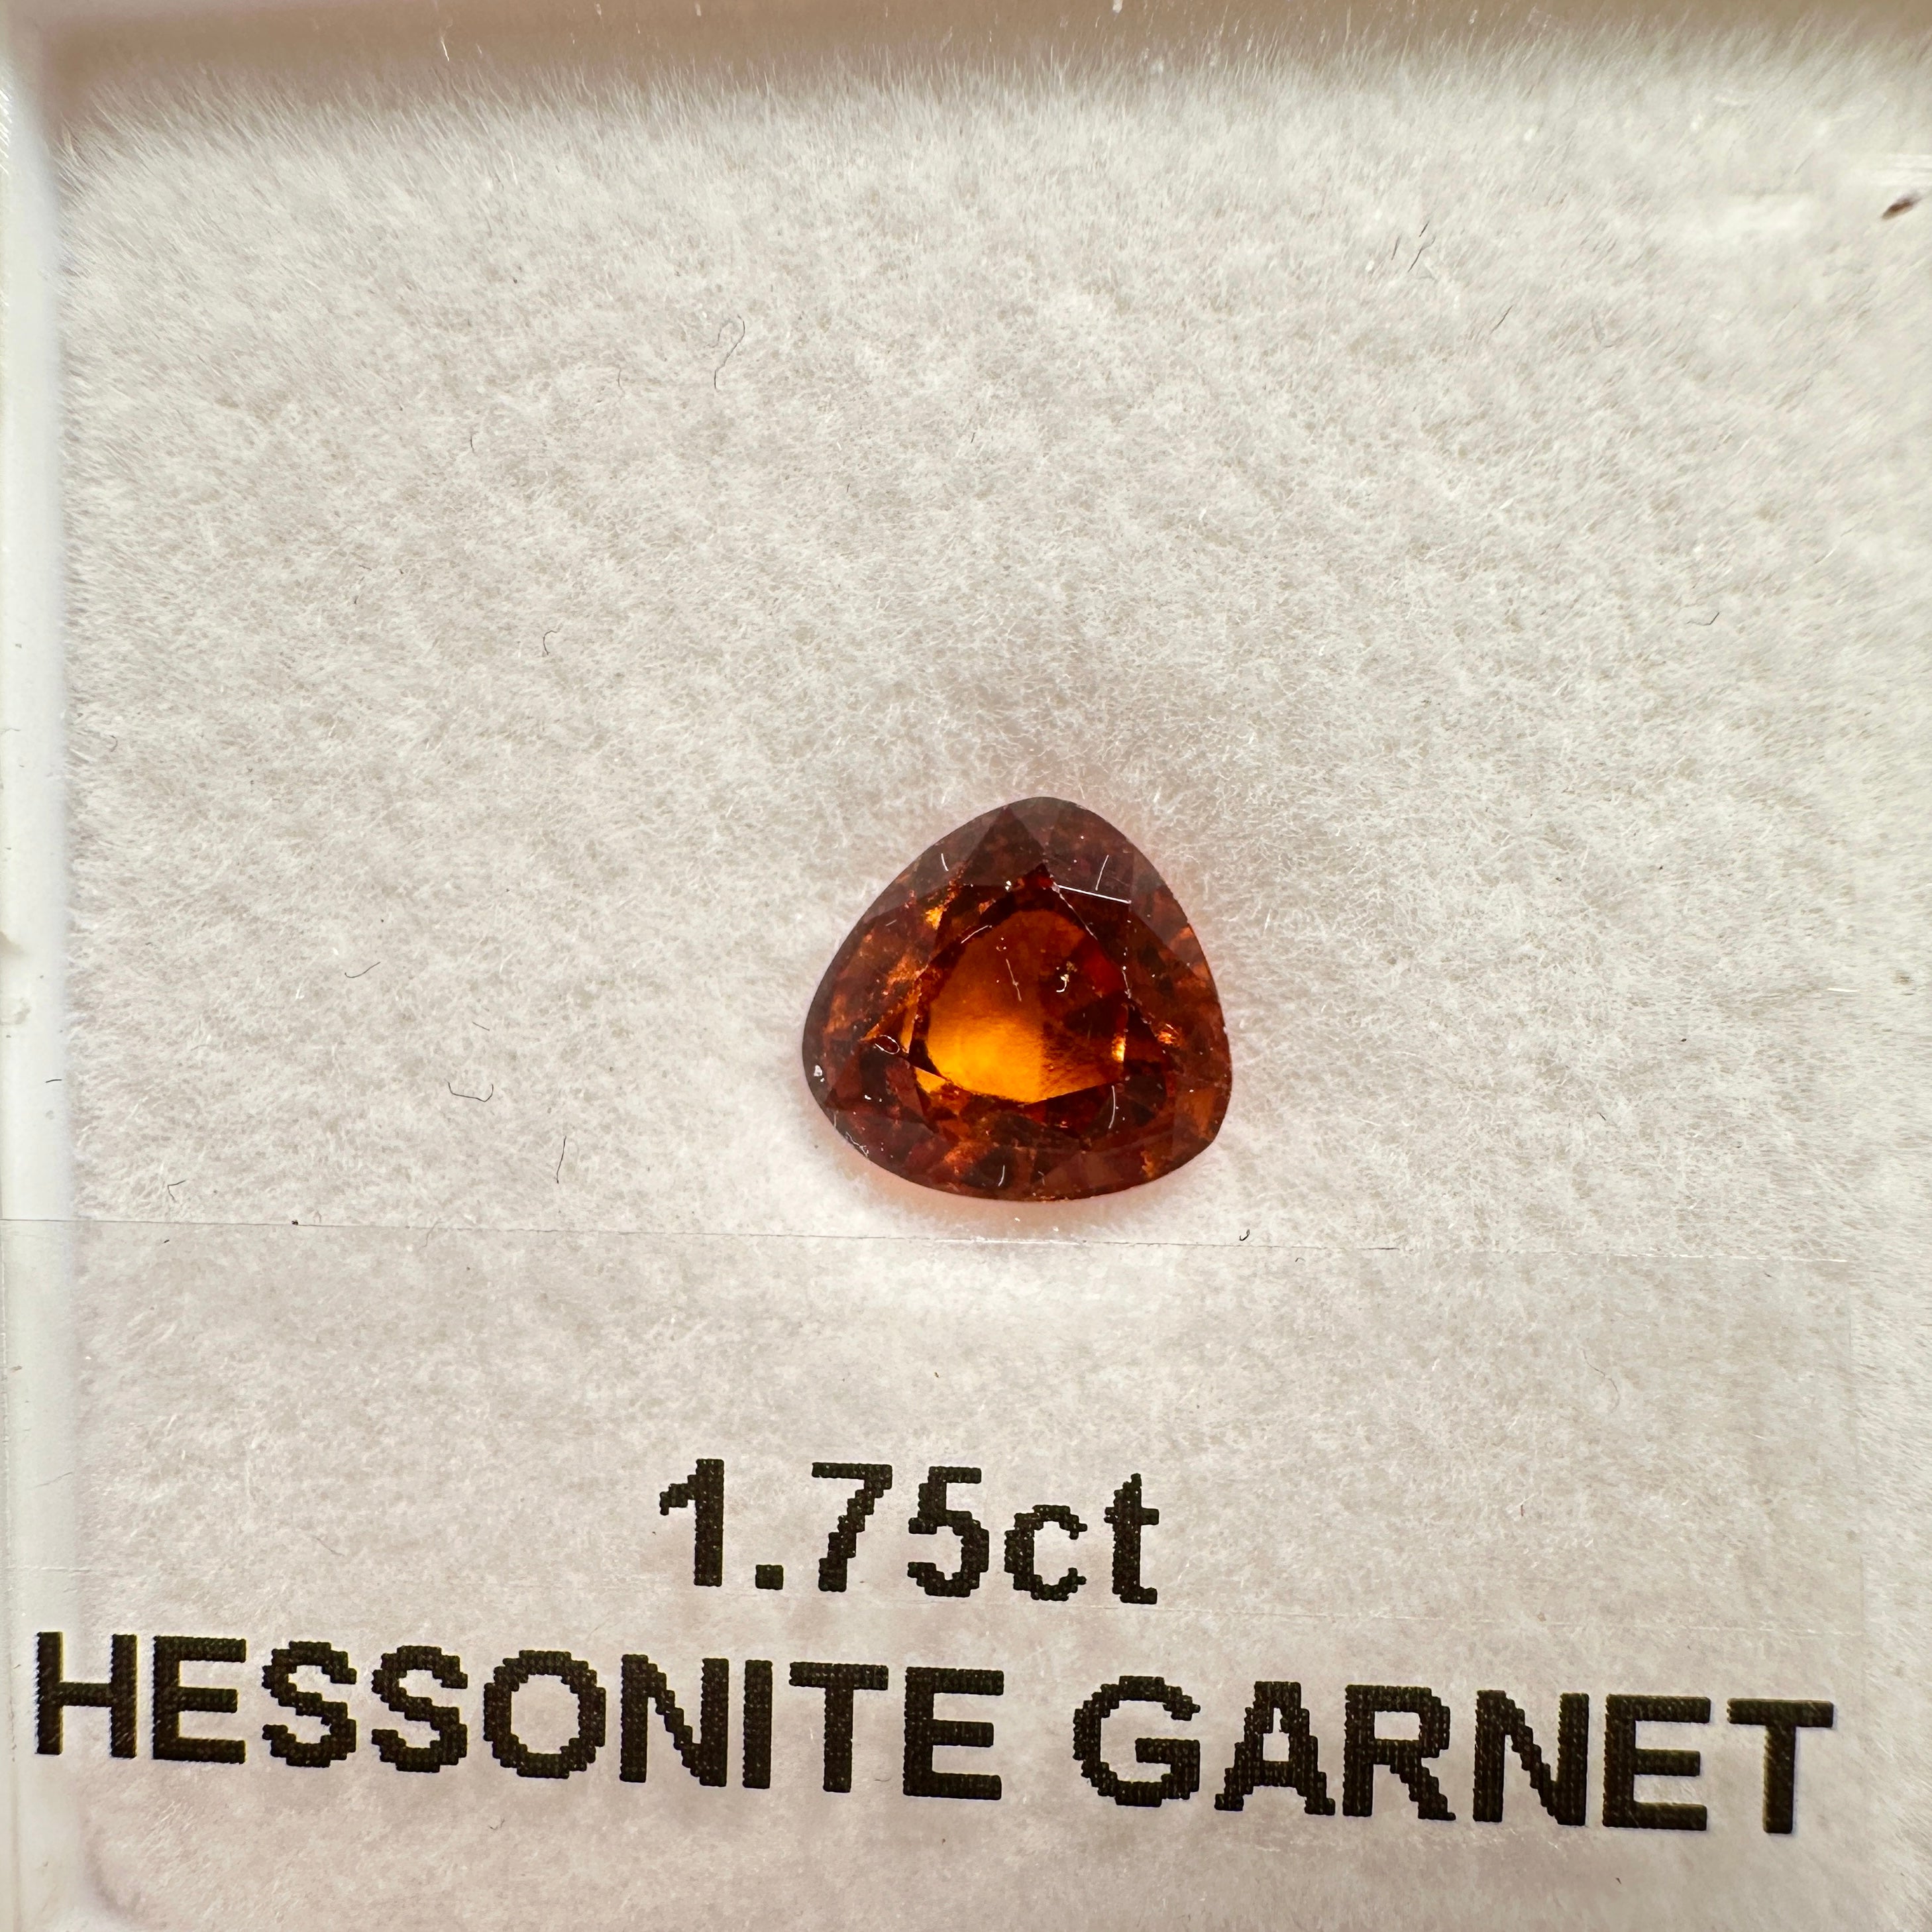 1.75ct Hessonite Garnet, Untreated Unheated, native cut